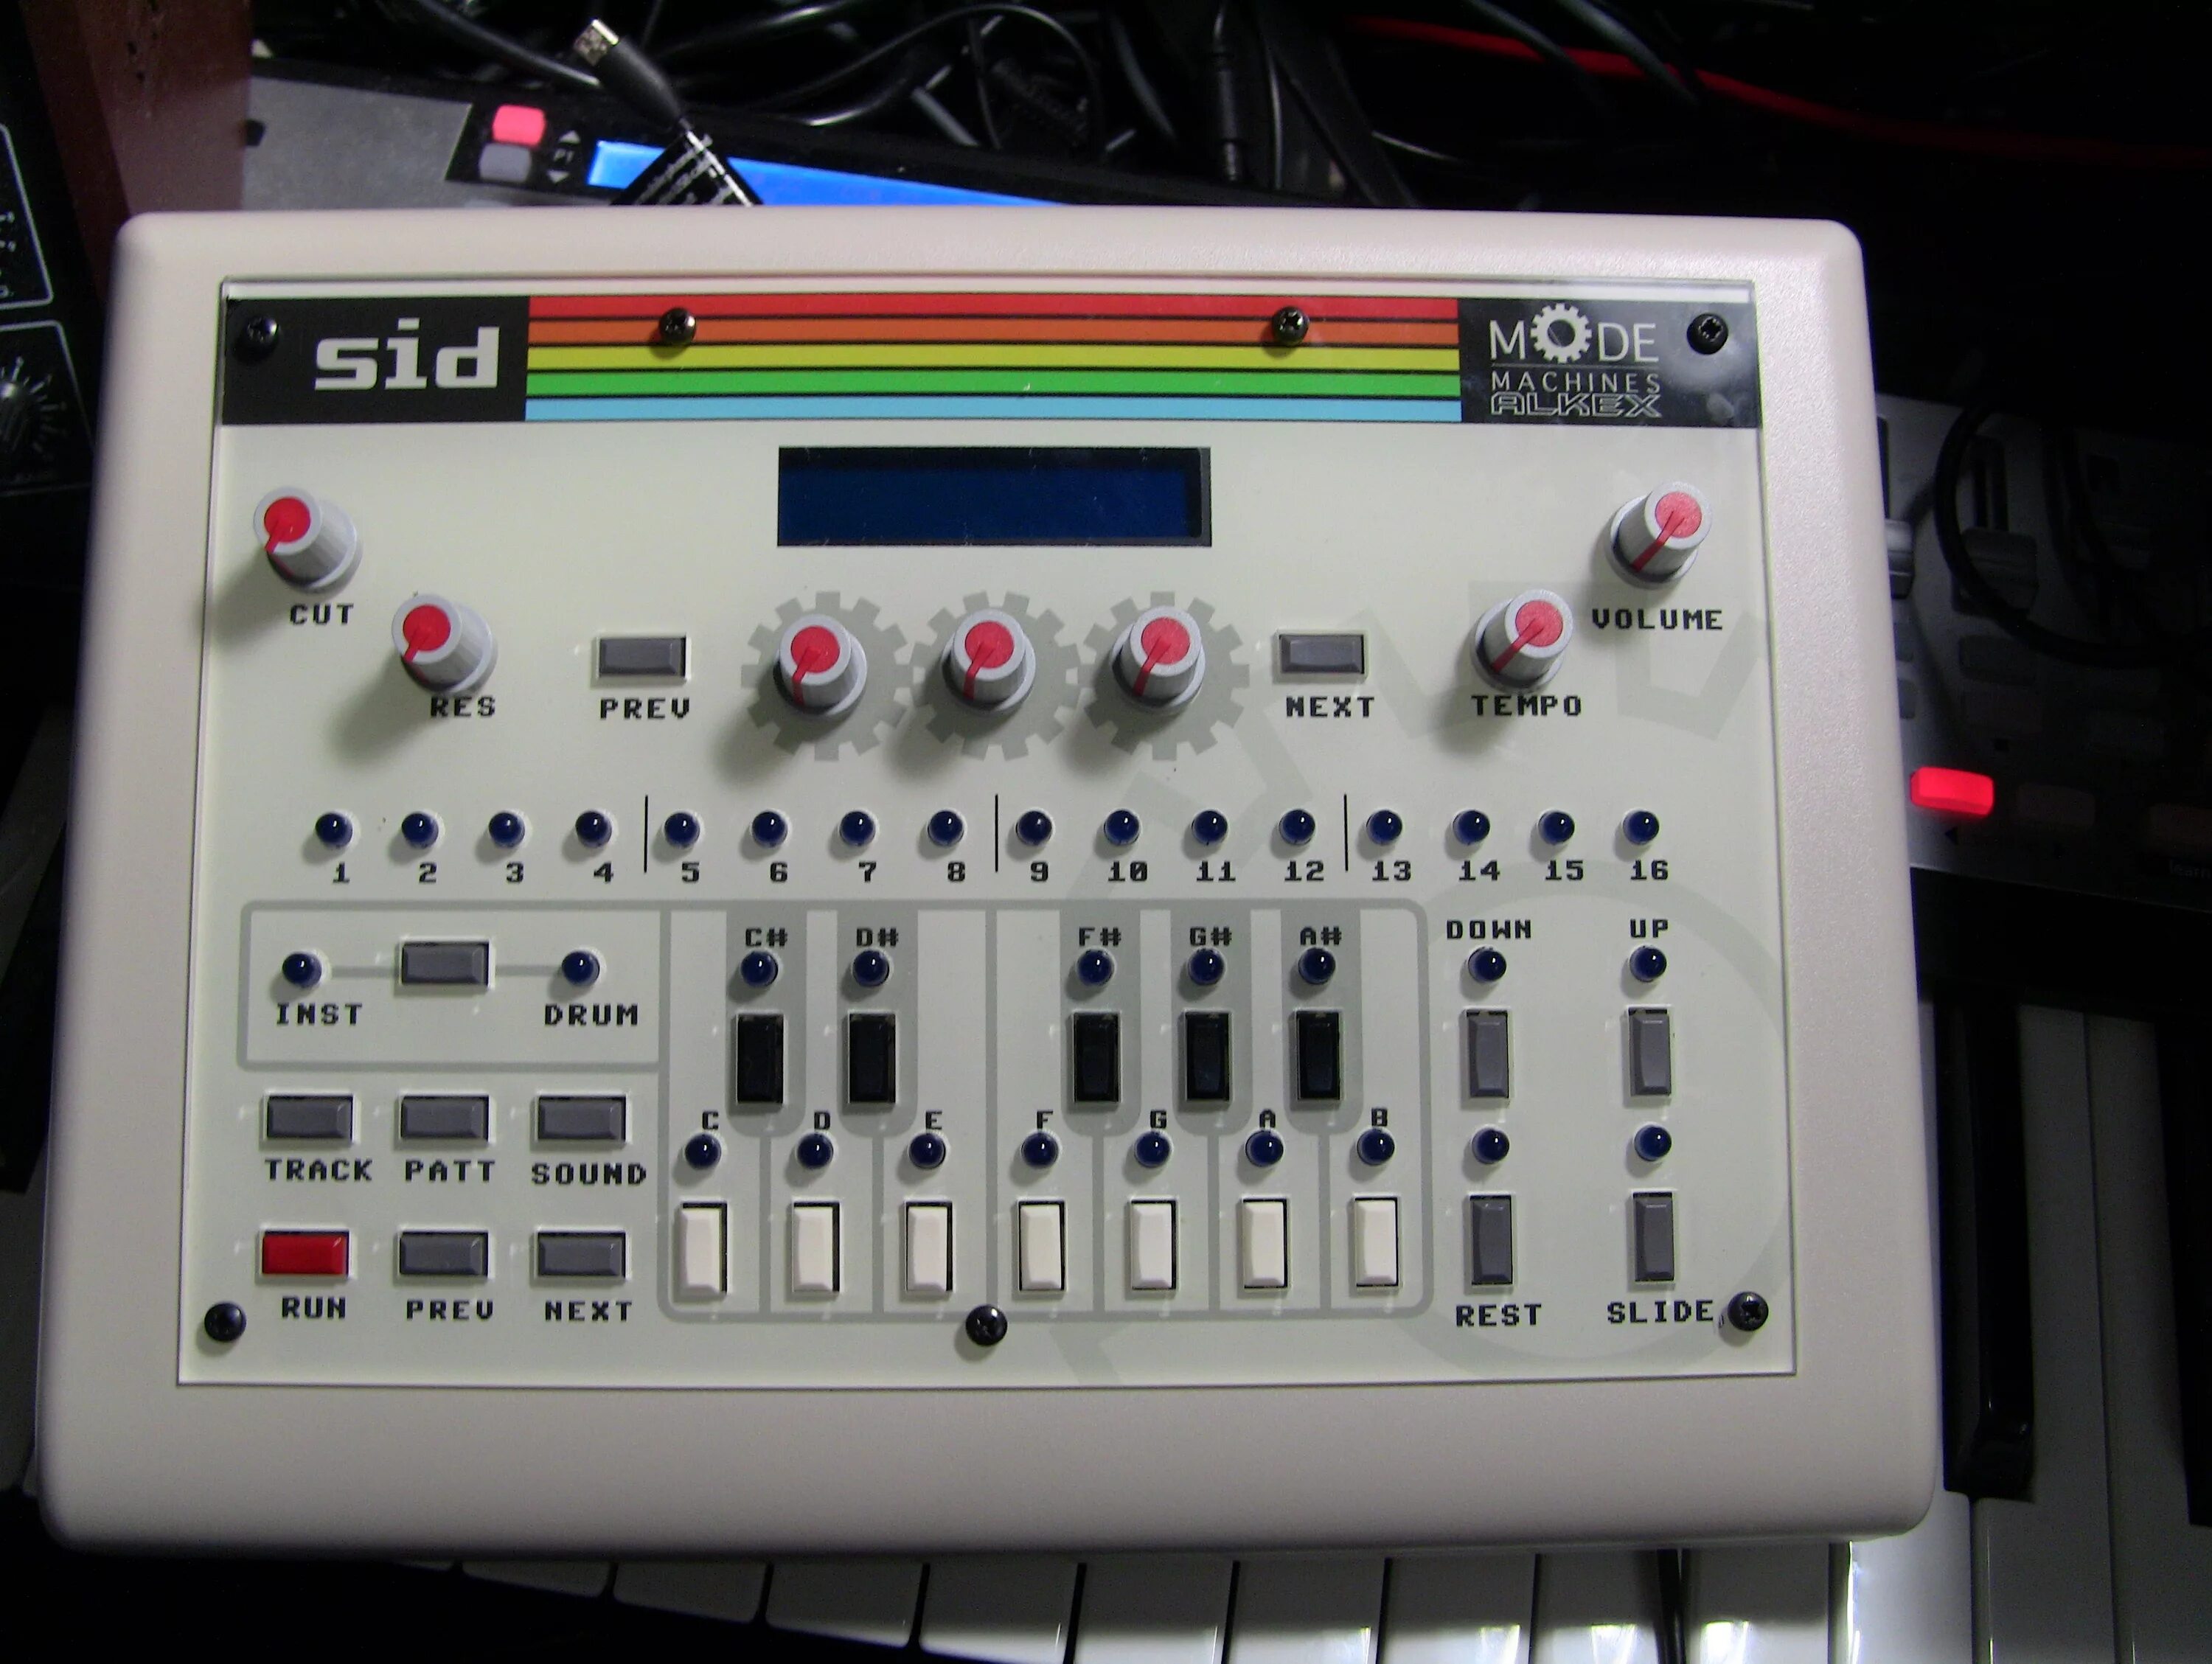 Sid801a. Sid300. Microtel MCT-888sid. Record making - Stoned Mode Machine. Machine mode